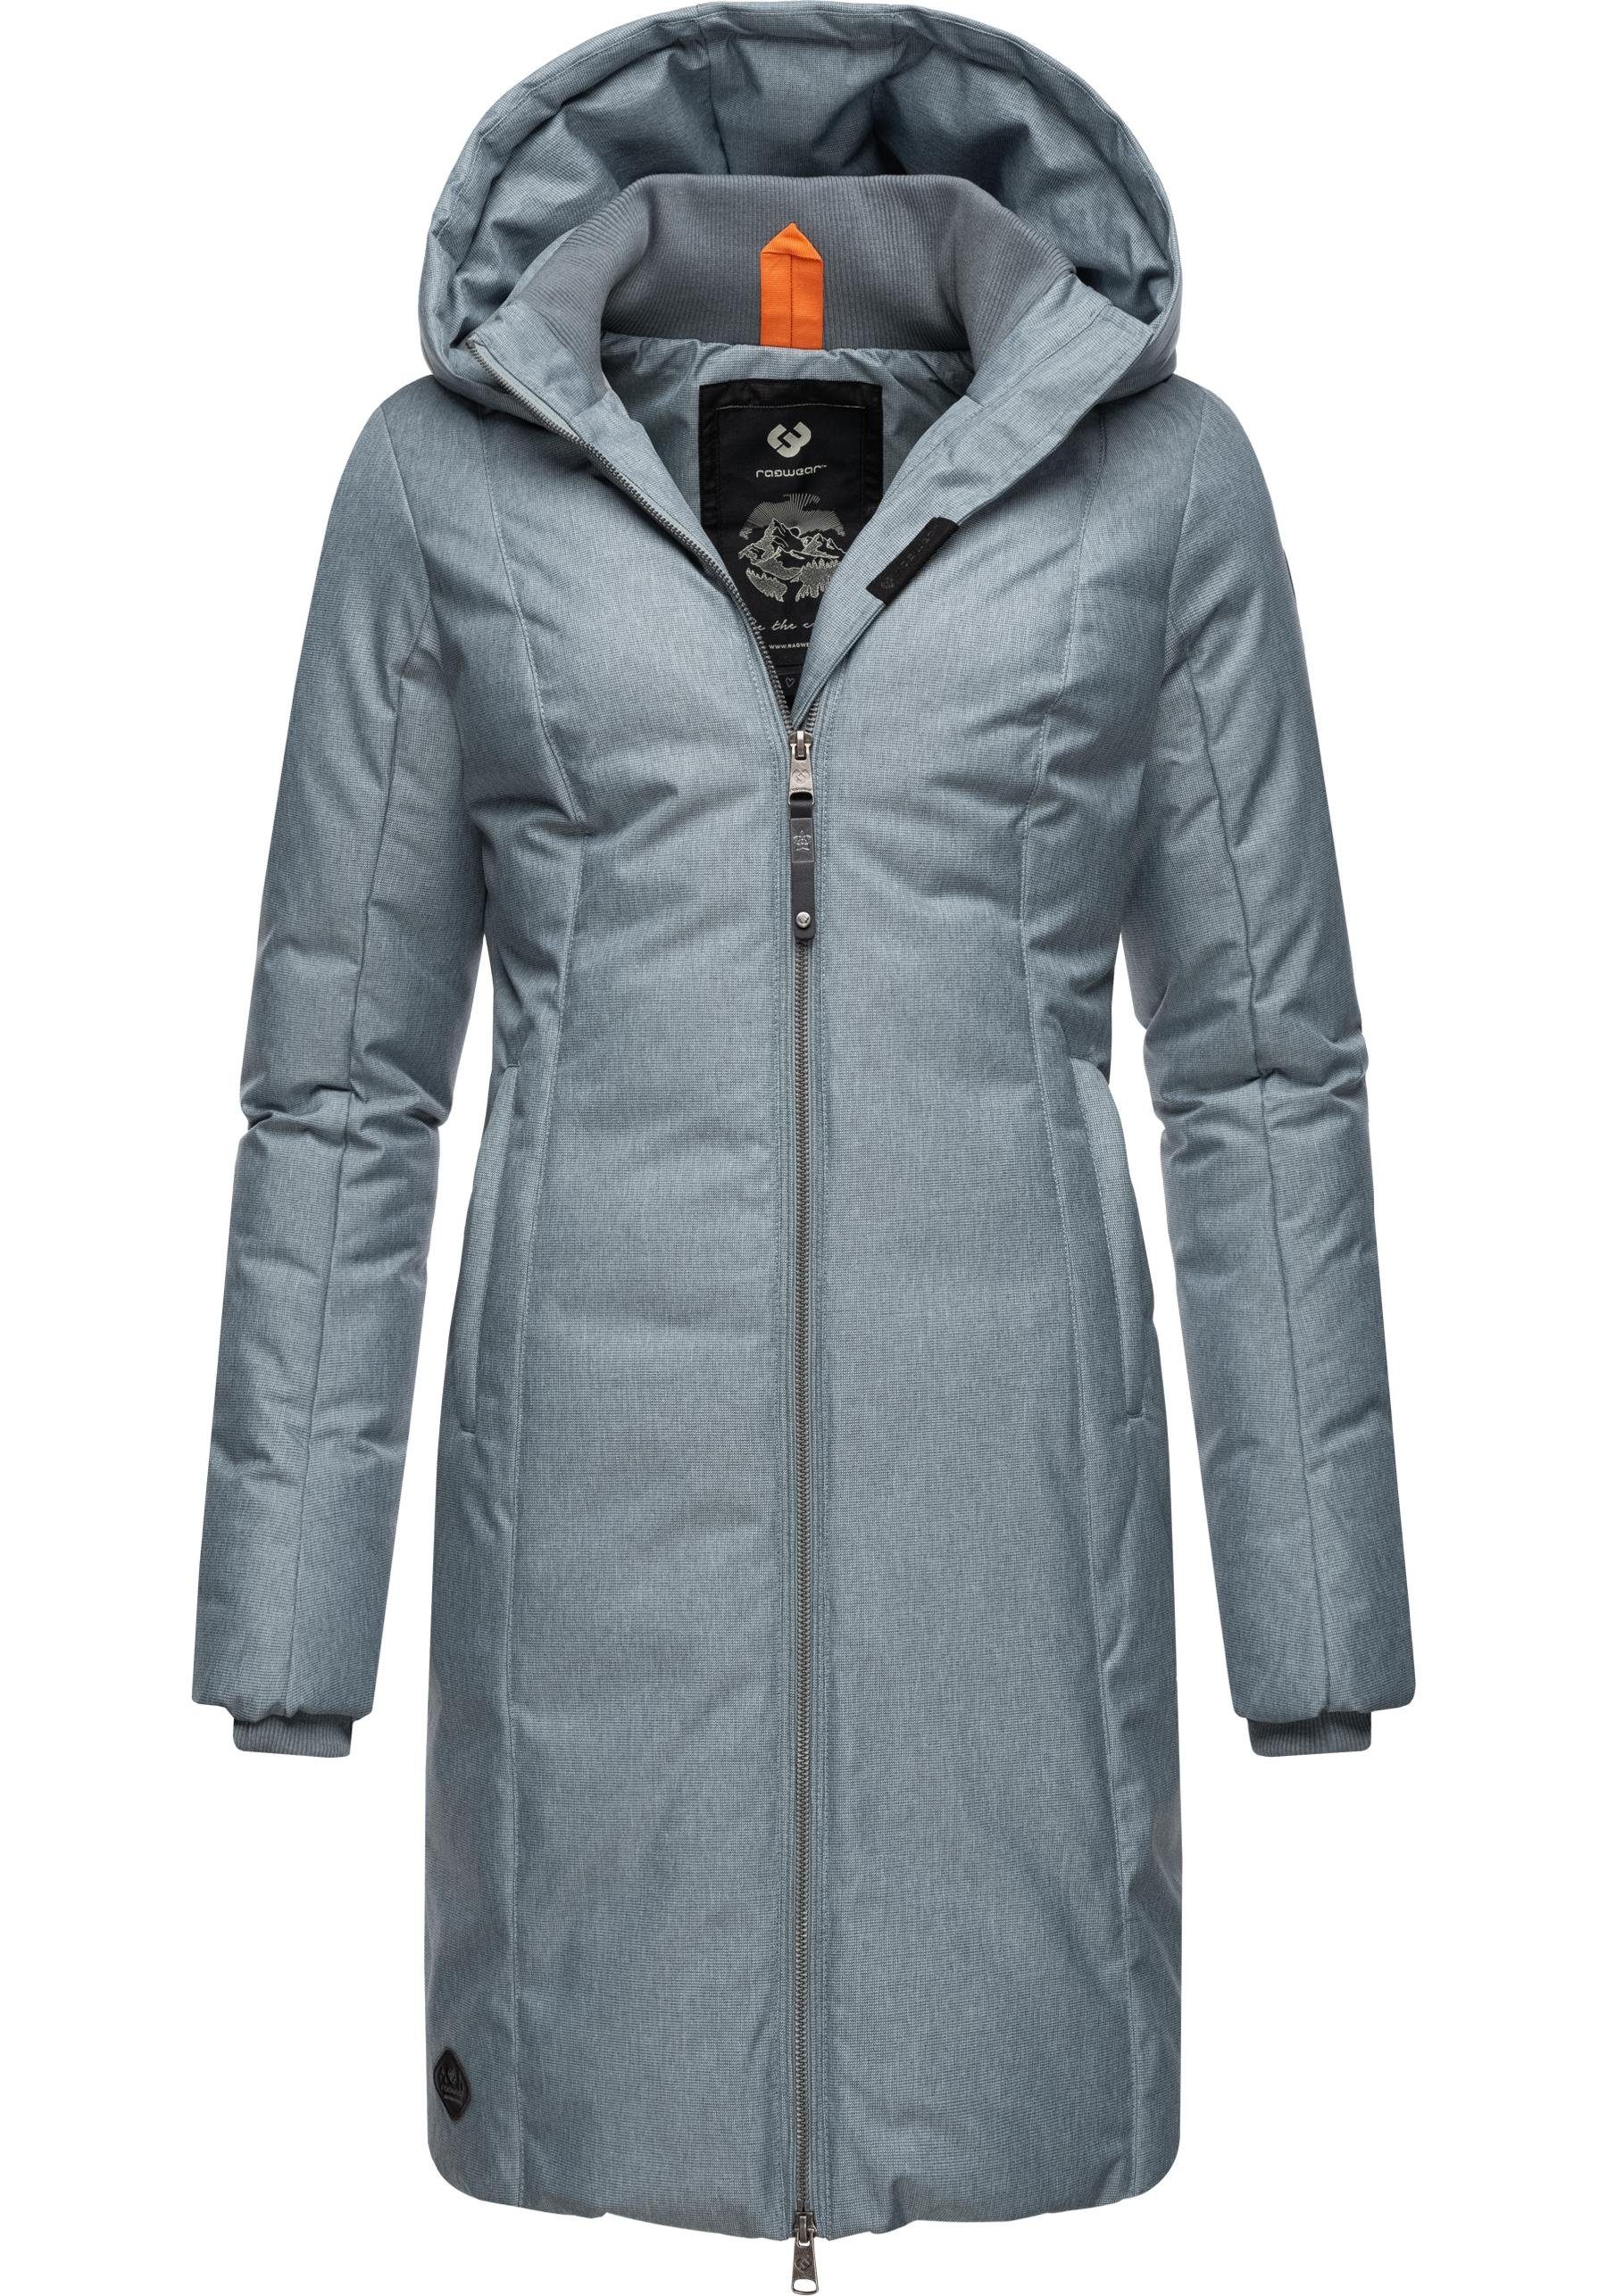 Ragwear Wintermantel Amarri stylischer Winterparka mit großer Kapuze graublau | Regenmäntel